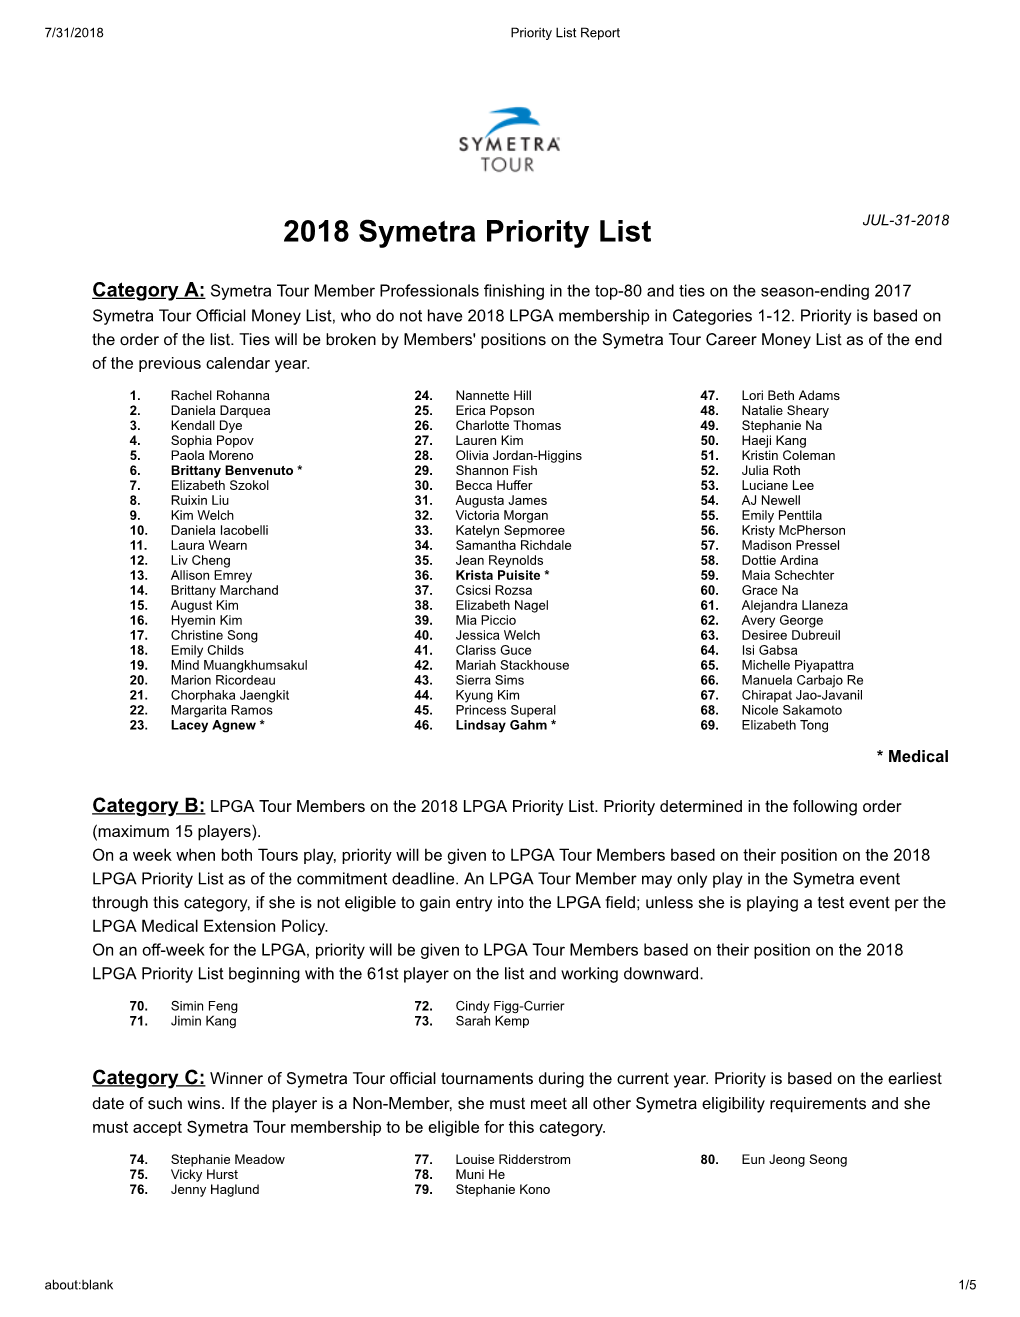 2018 Symetra Priority List JUL-31-2018